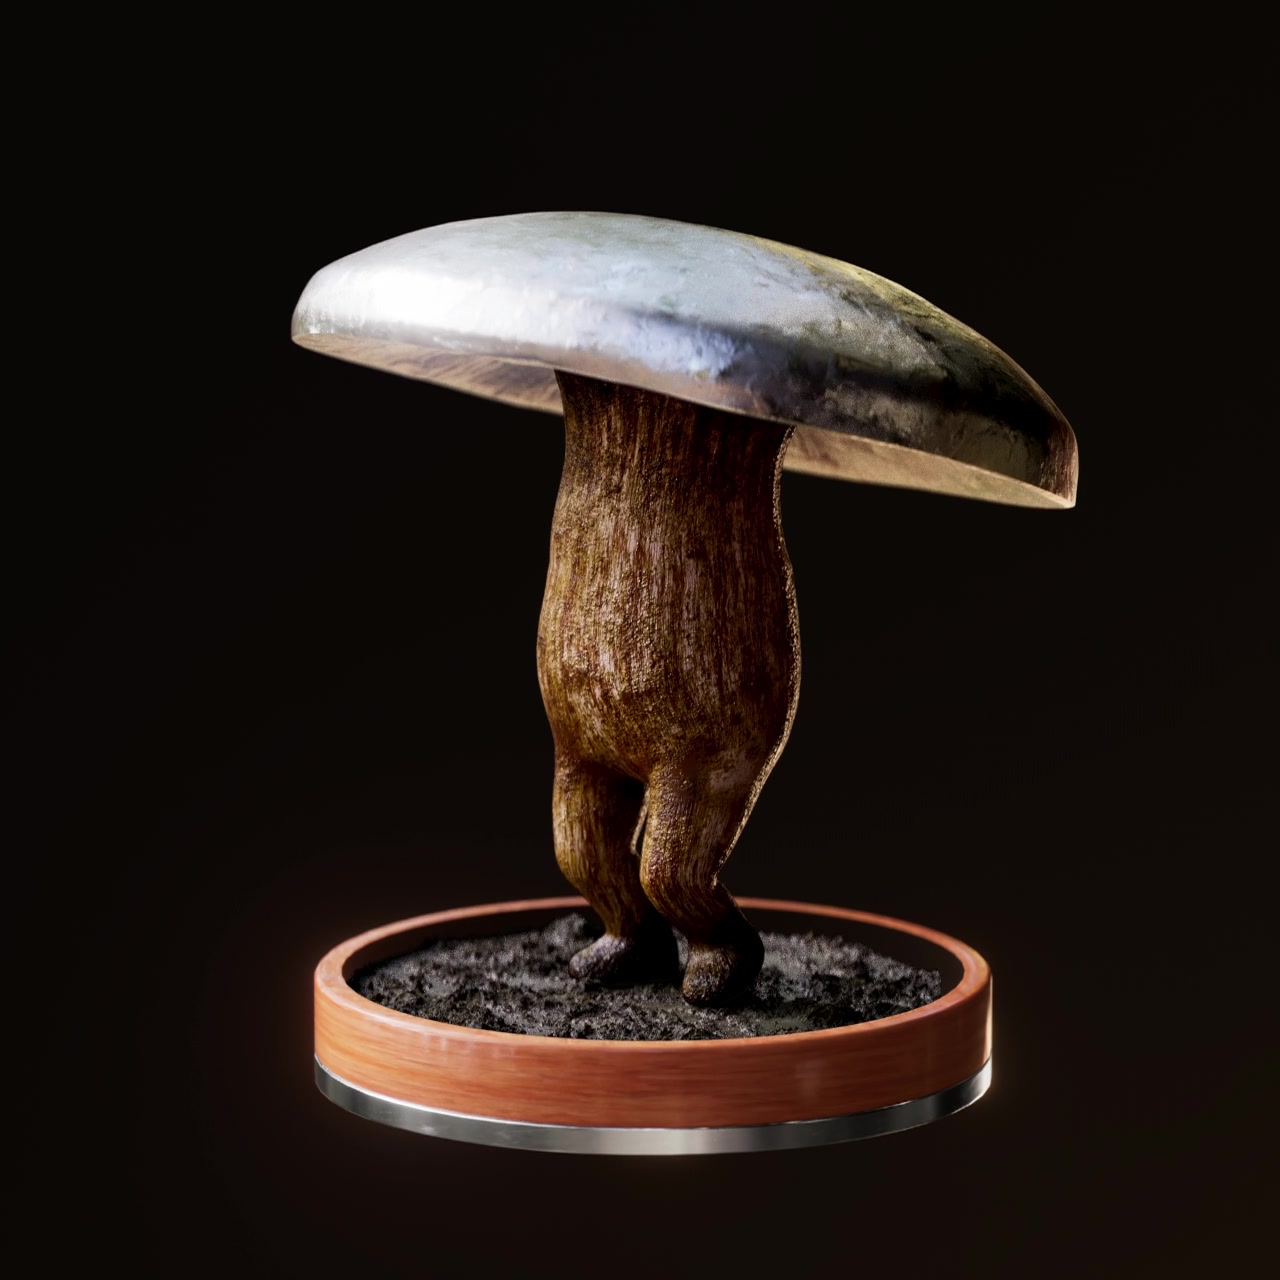 Fungi #9112